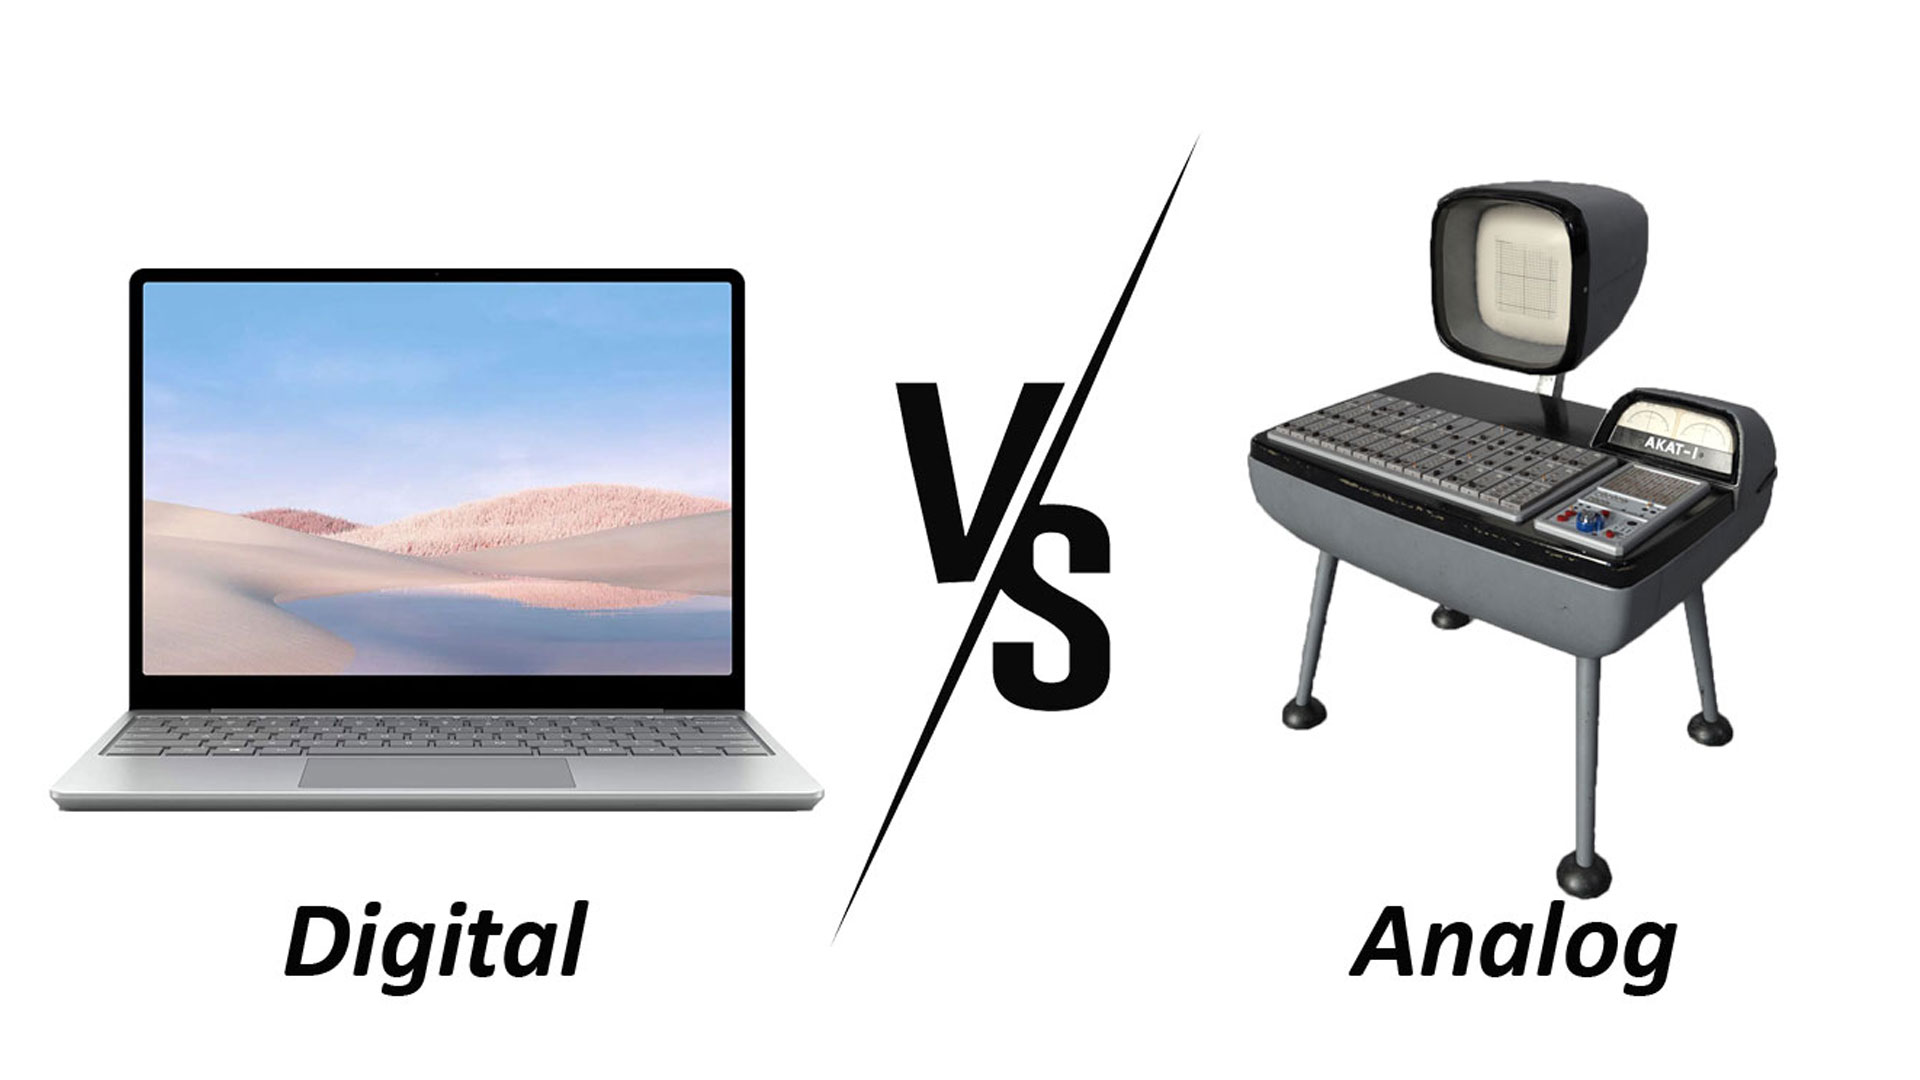 تفاوت آنالوگ و دیجیتال